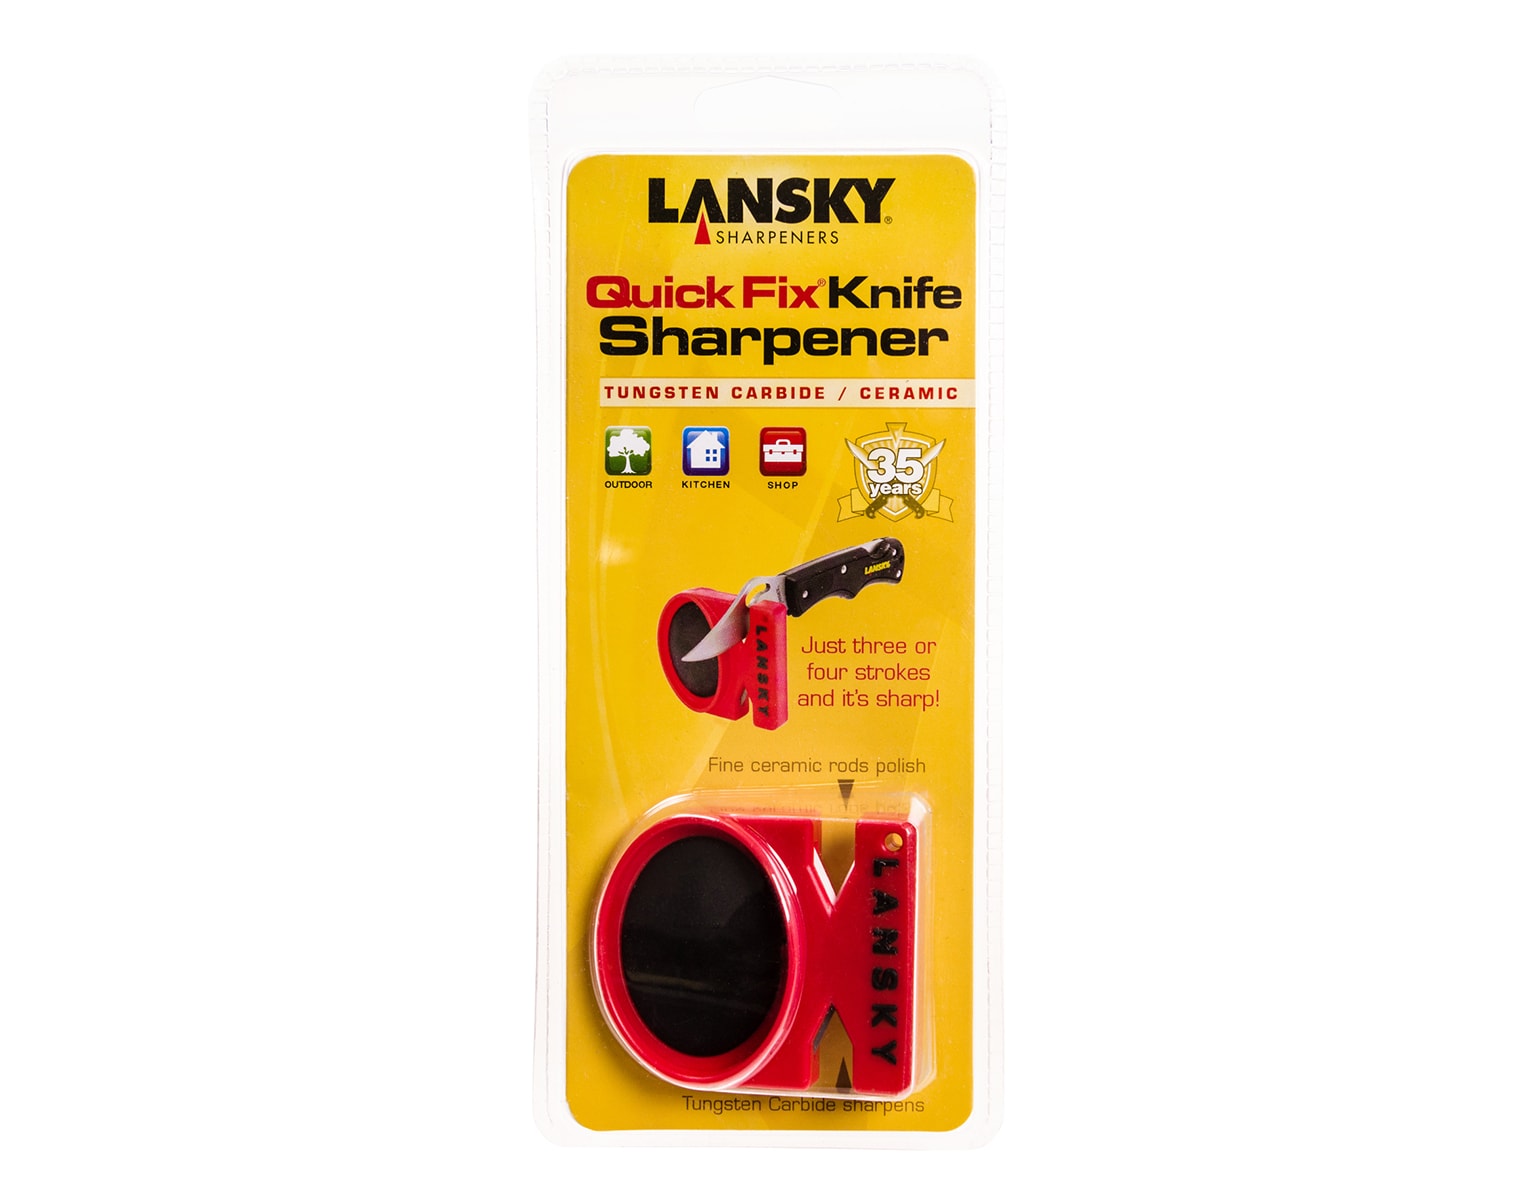 Ostrzałka kieszonkowa Lansky Quick Fix